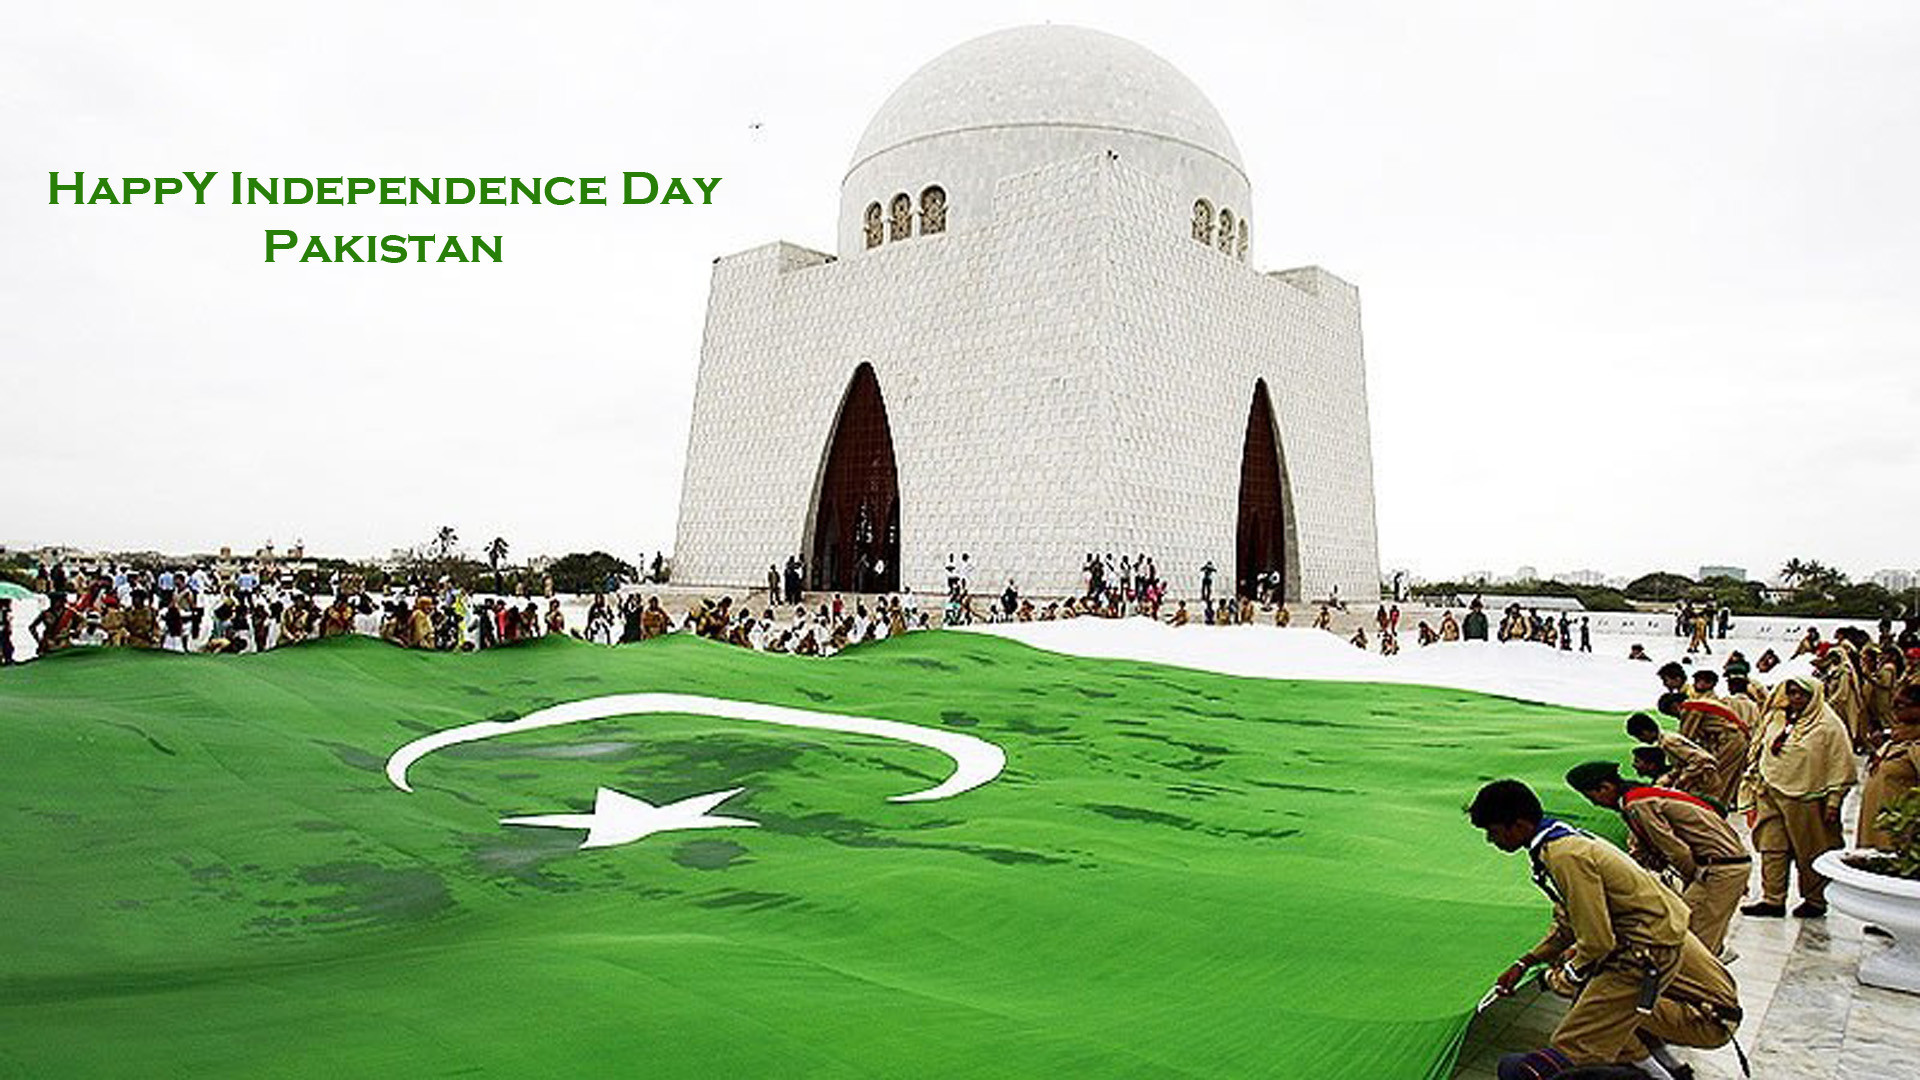 1920x1080 Pakistani Celebrating Independence On Quaid-e-Azam Mazar Wallpaper